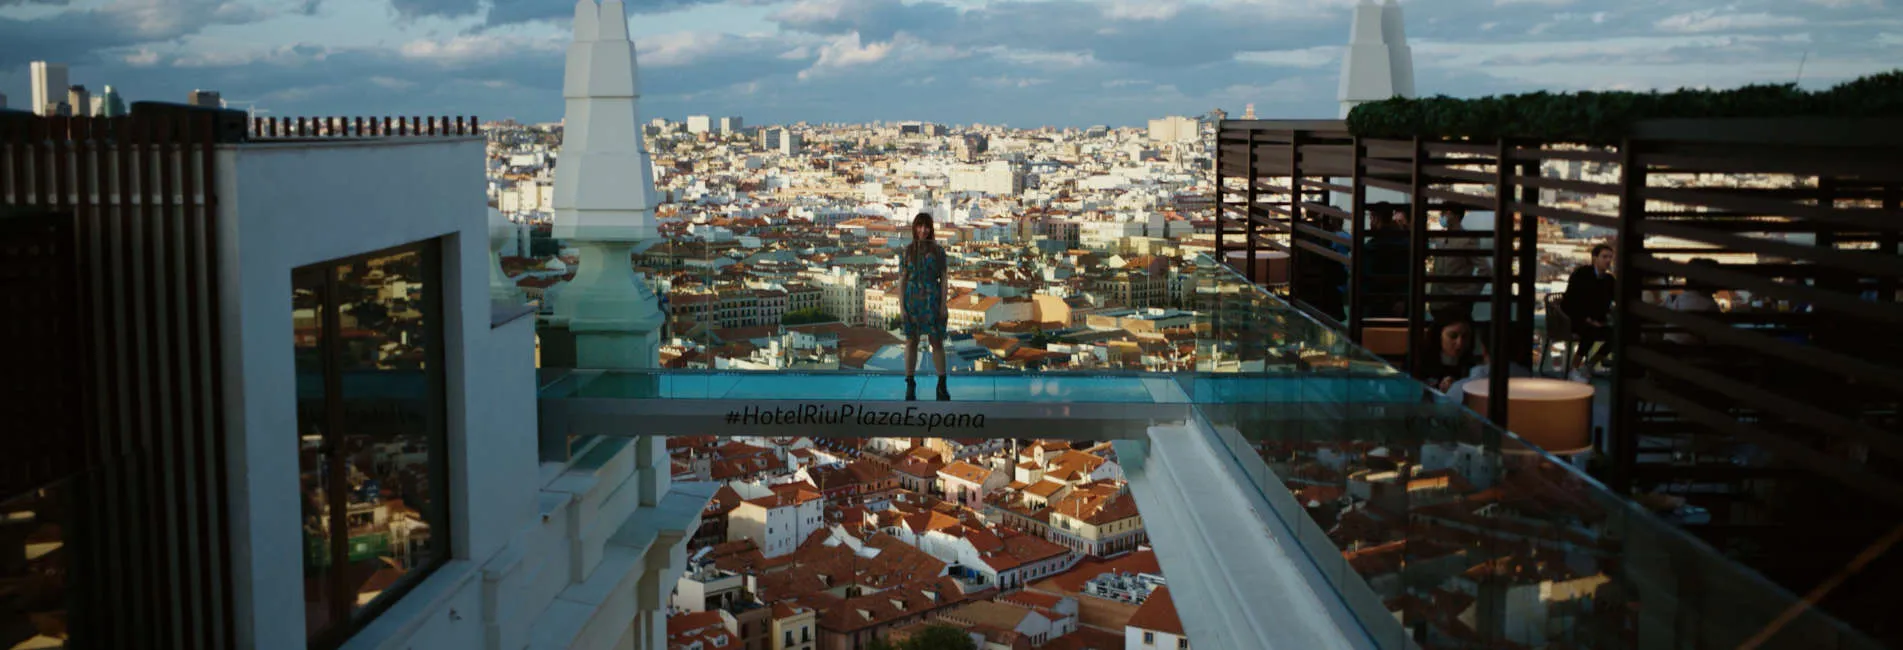 Pasarela transparente de la terraza del Hotel Riu Plaza de España